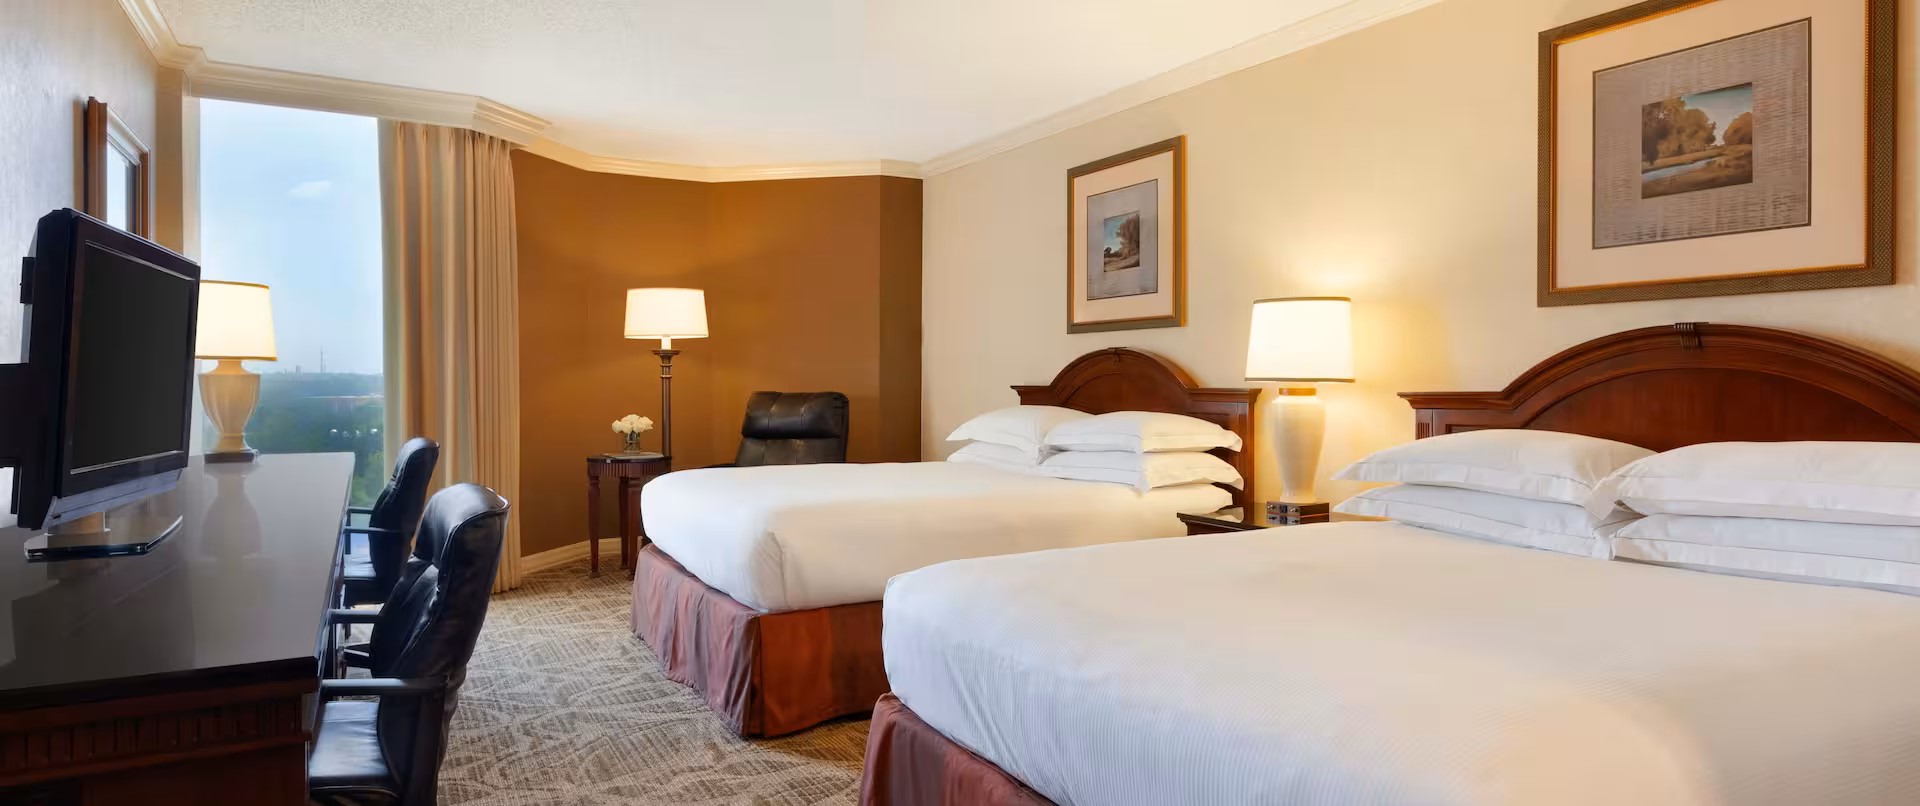 Hilton DFW Lakes Queen/Queen Guestroom